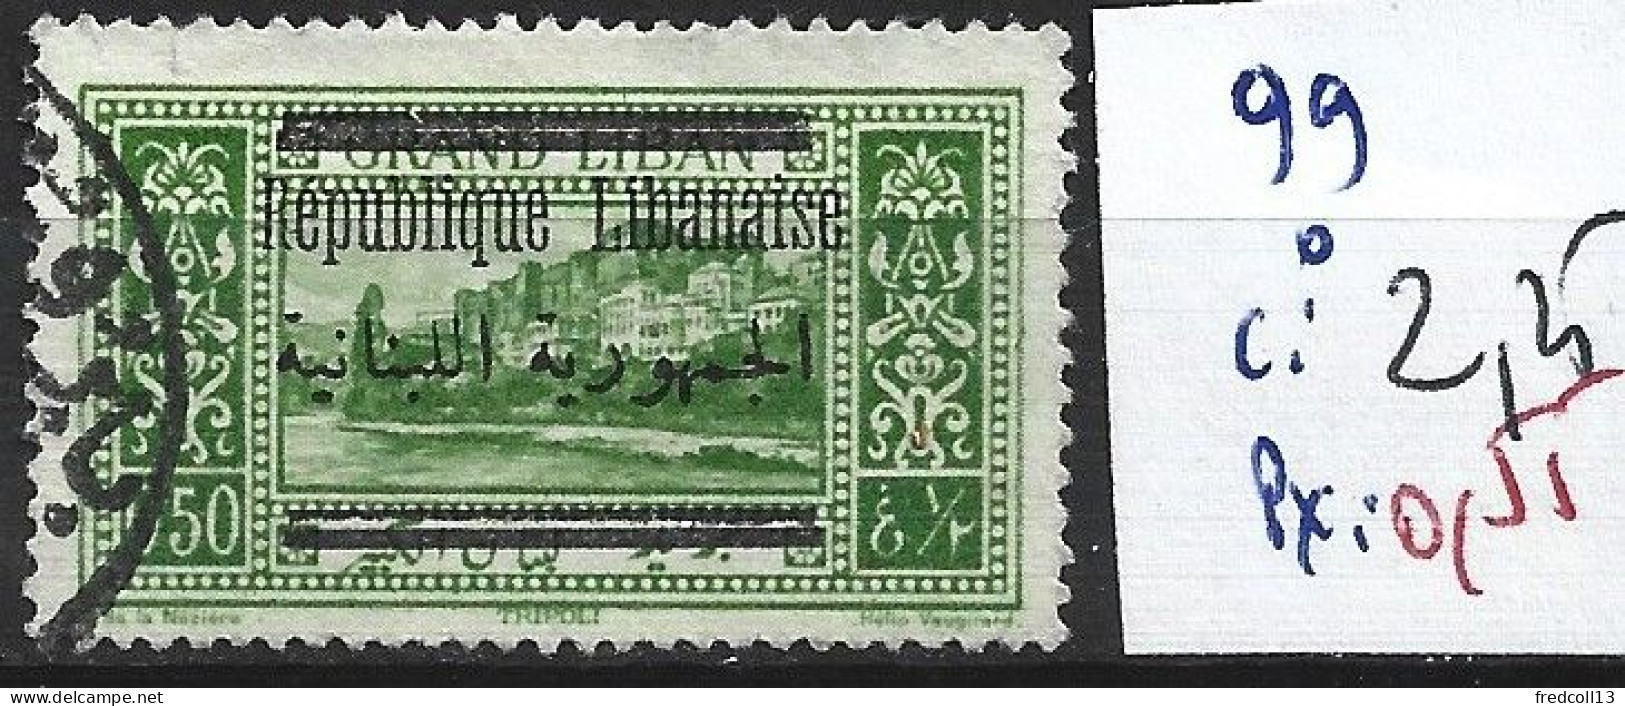 GRAND LIBAN 99 Oblitéré Côte 2.25 € - Used Stamps